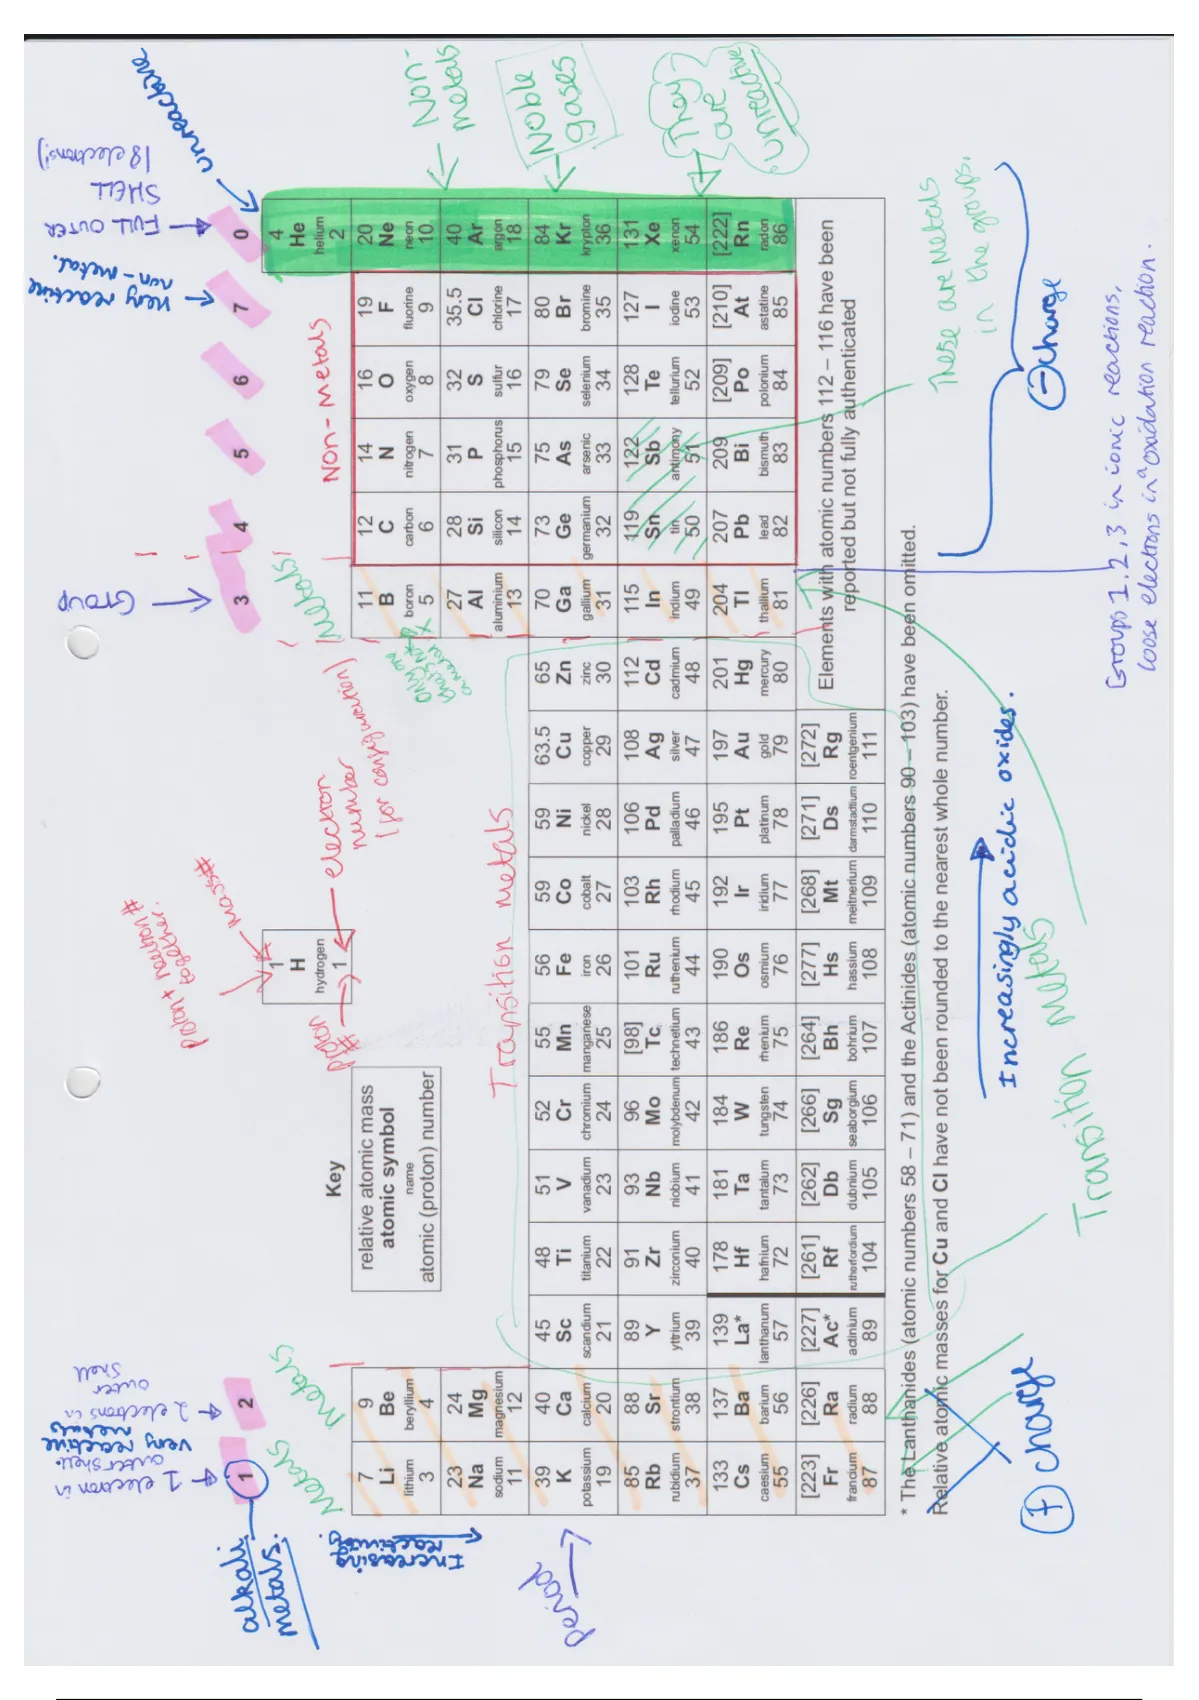 Summary Gcse Chemistry Periodic Table Revision Notes Chemistry Stuvia Uk 5312